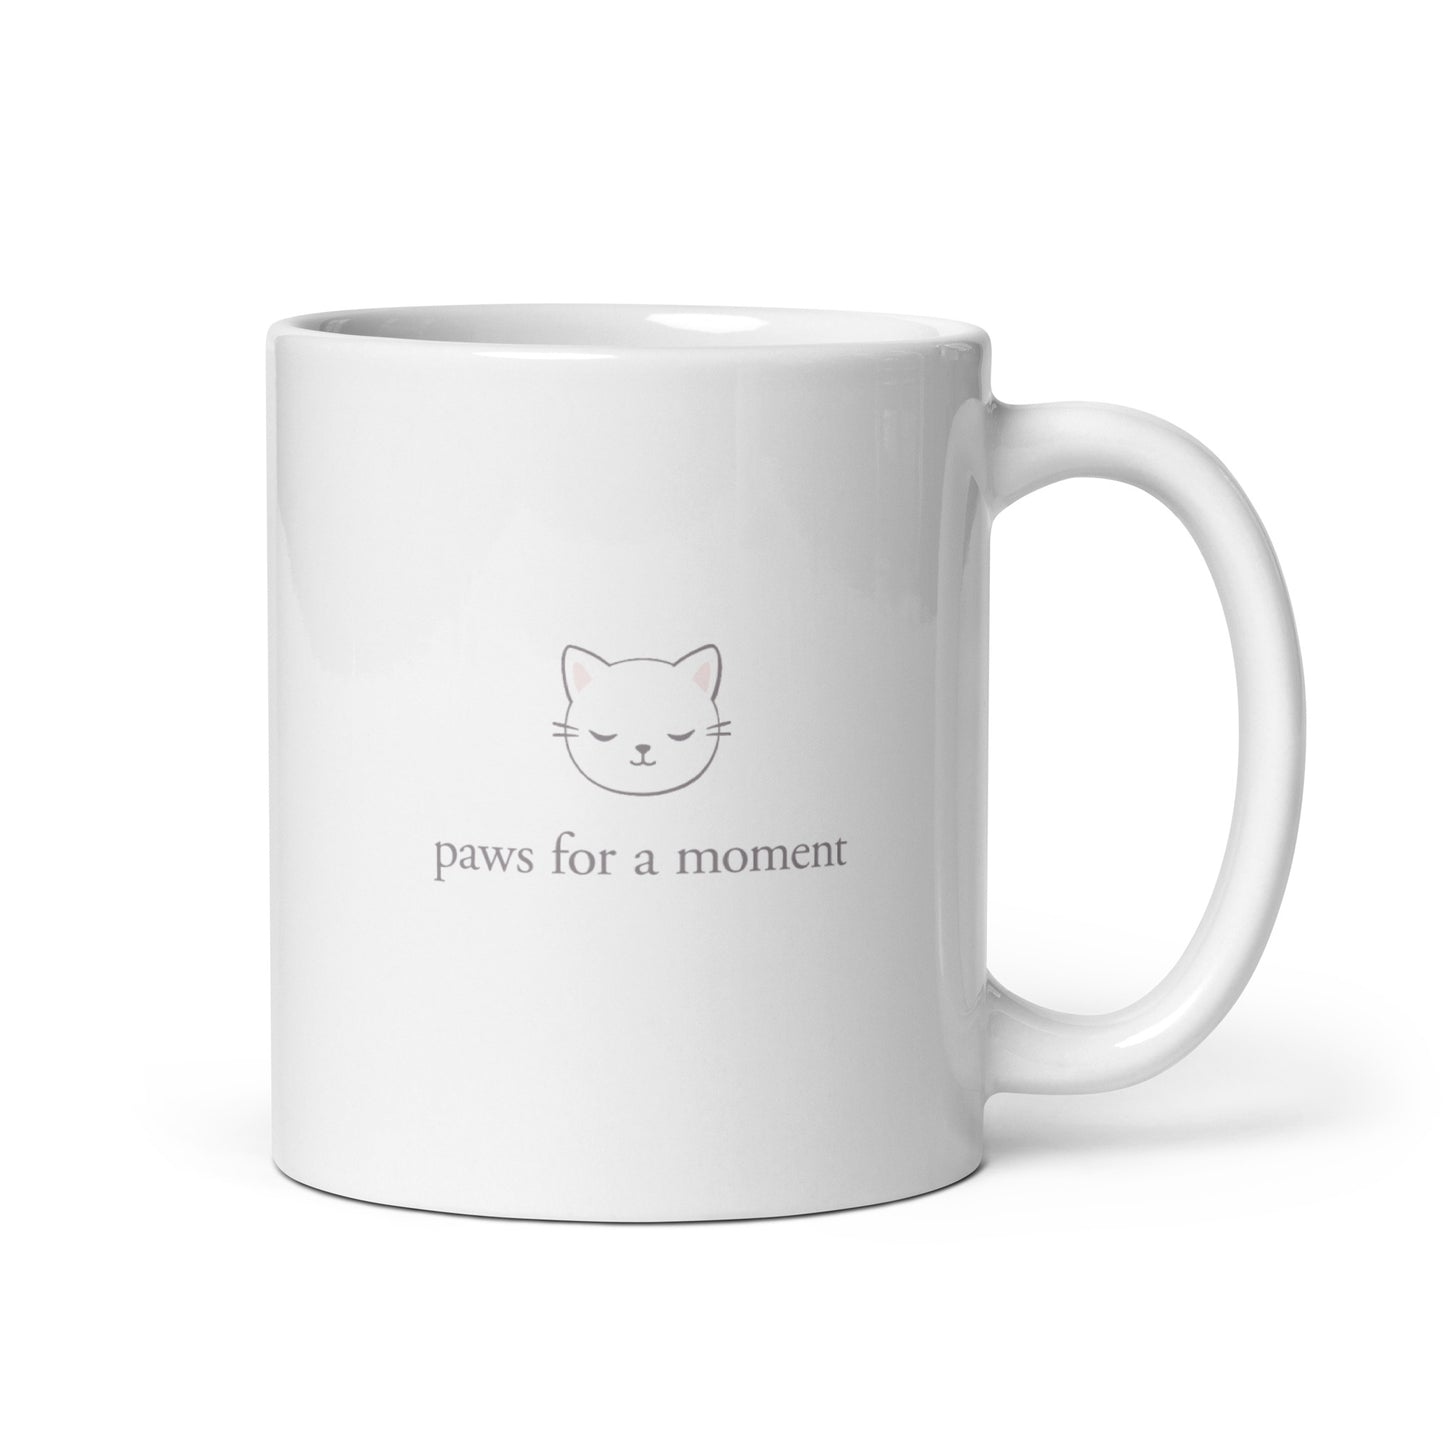 Paws for a Moment - White glossy mug